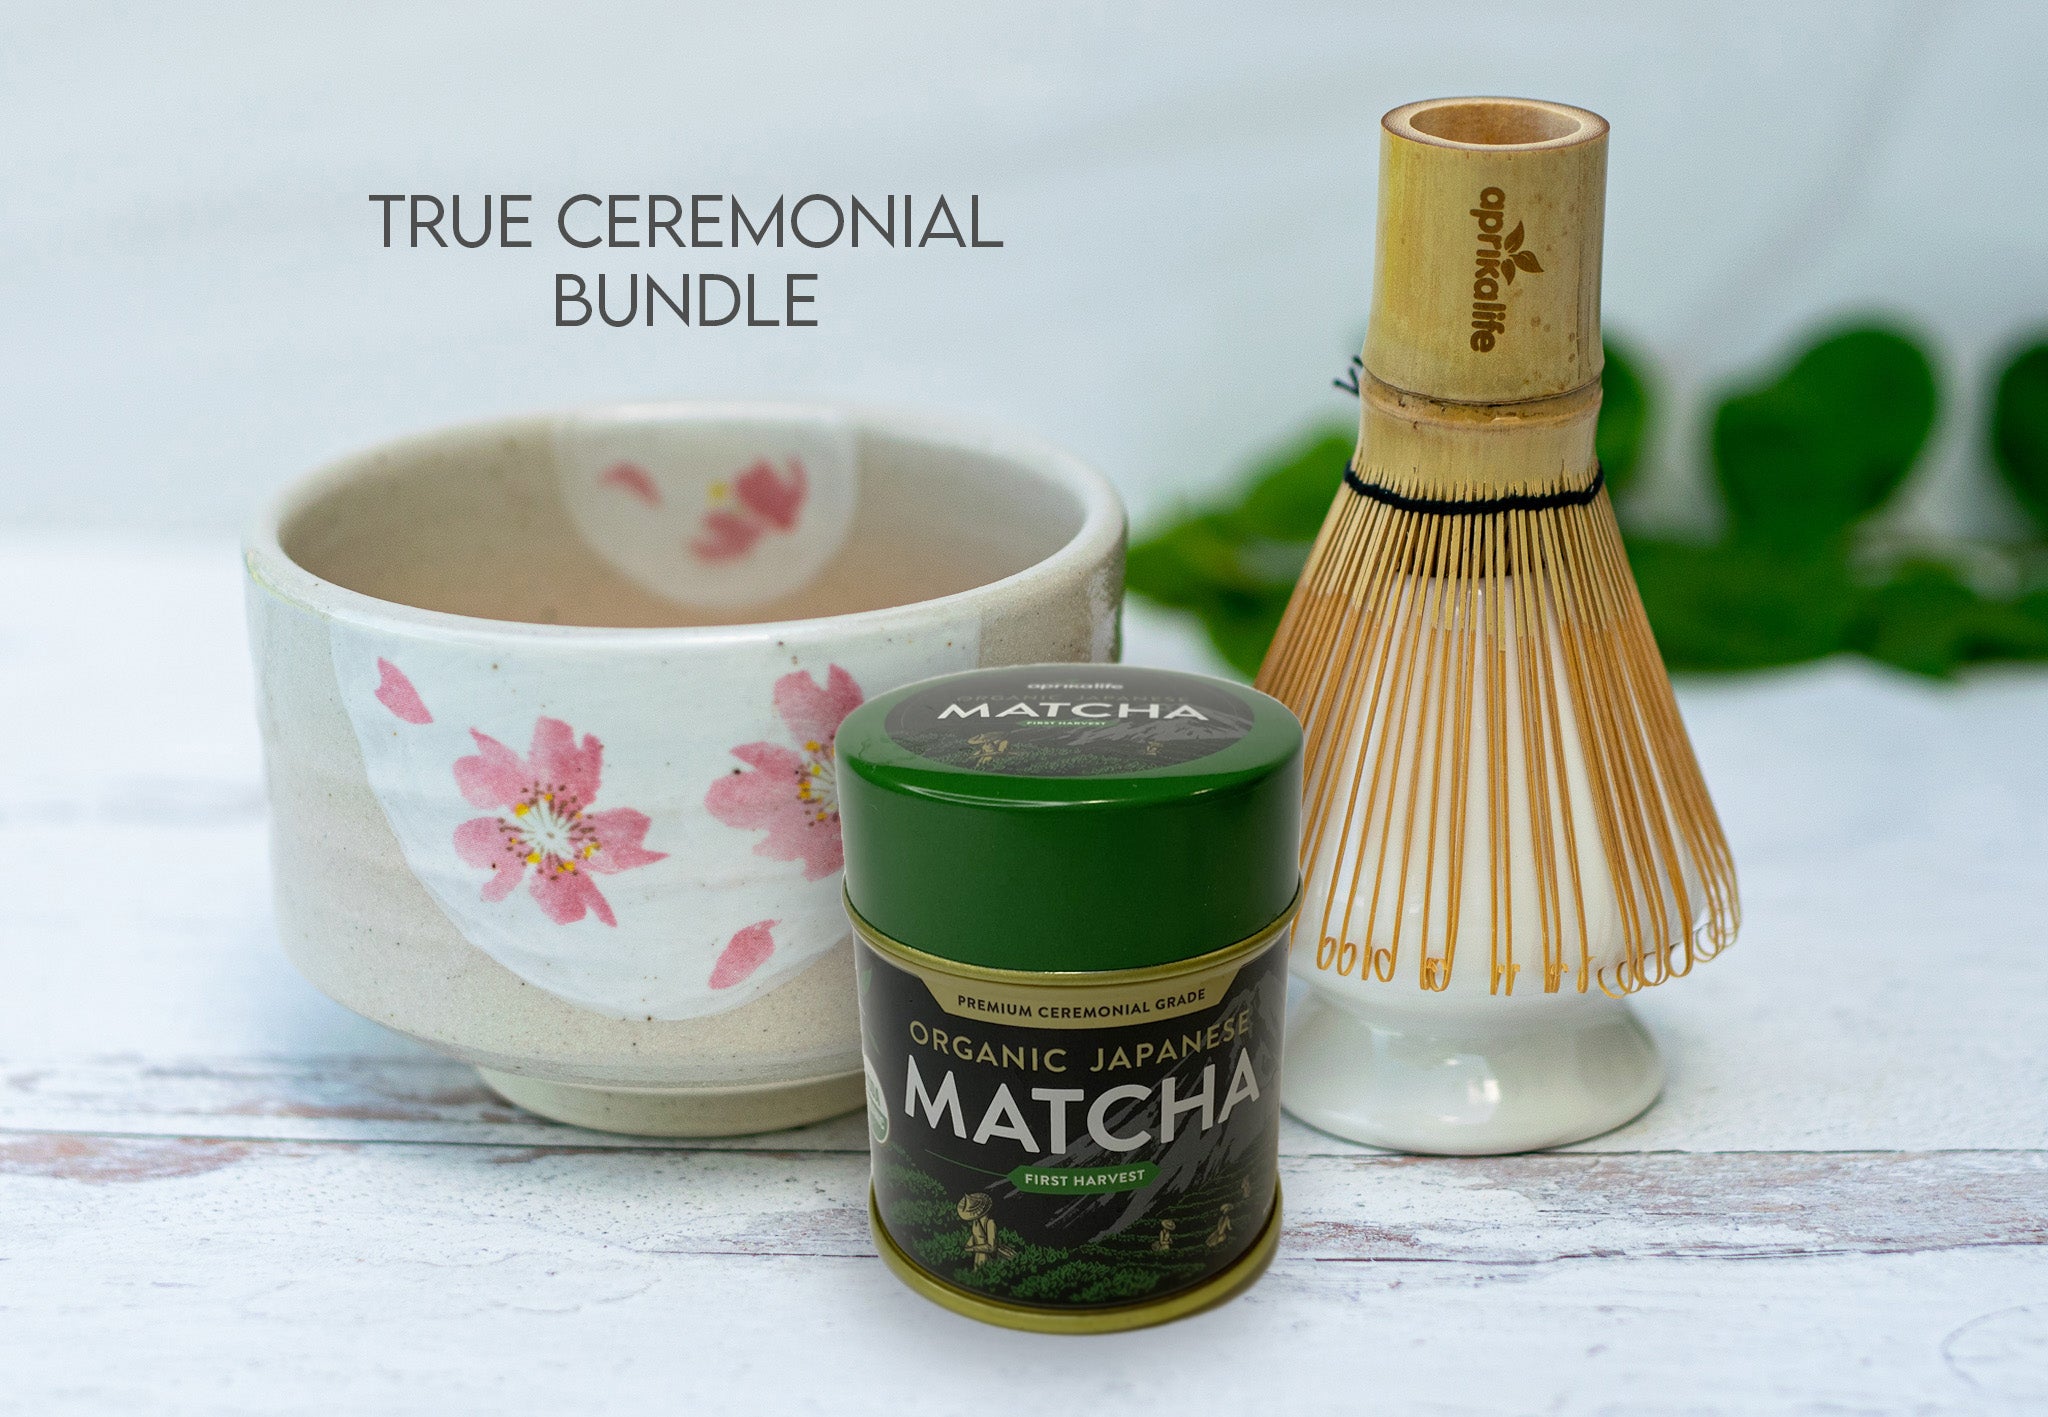 Matcha Gift Set - JAPANESE GREEN TEA